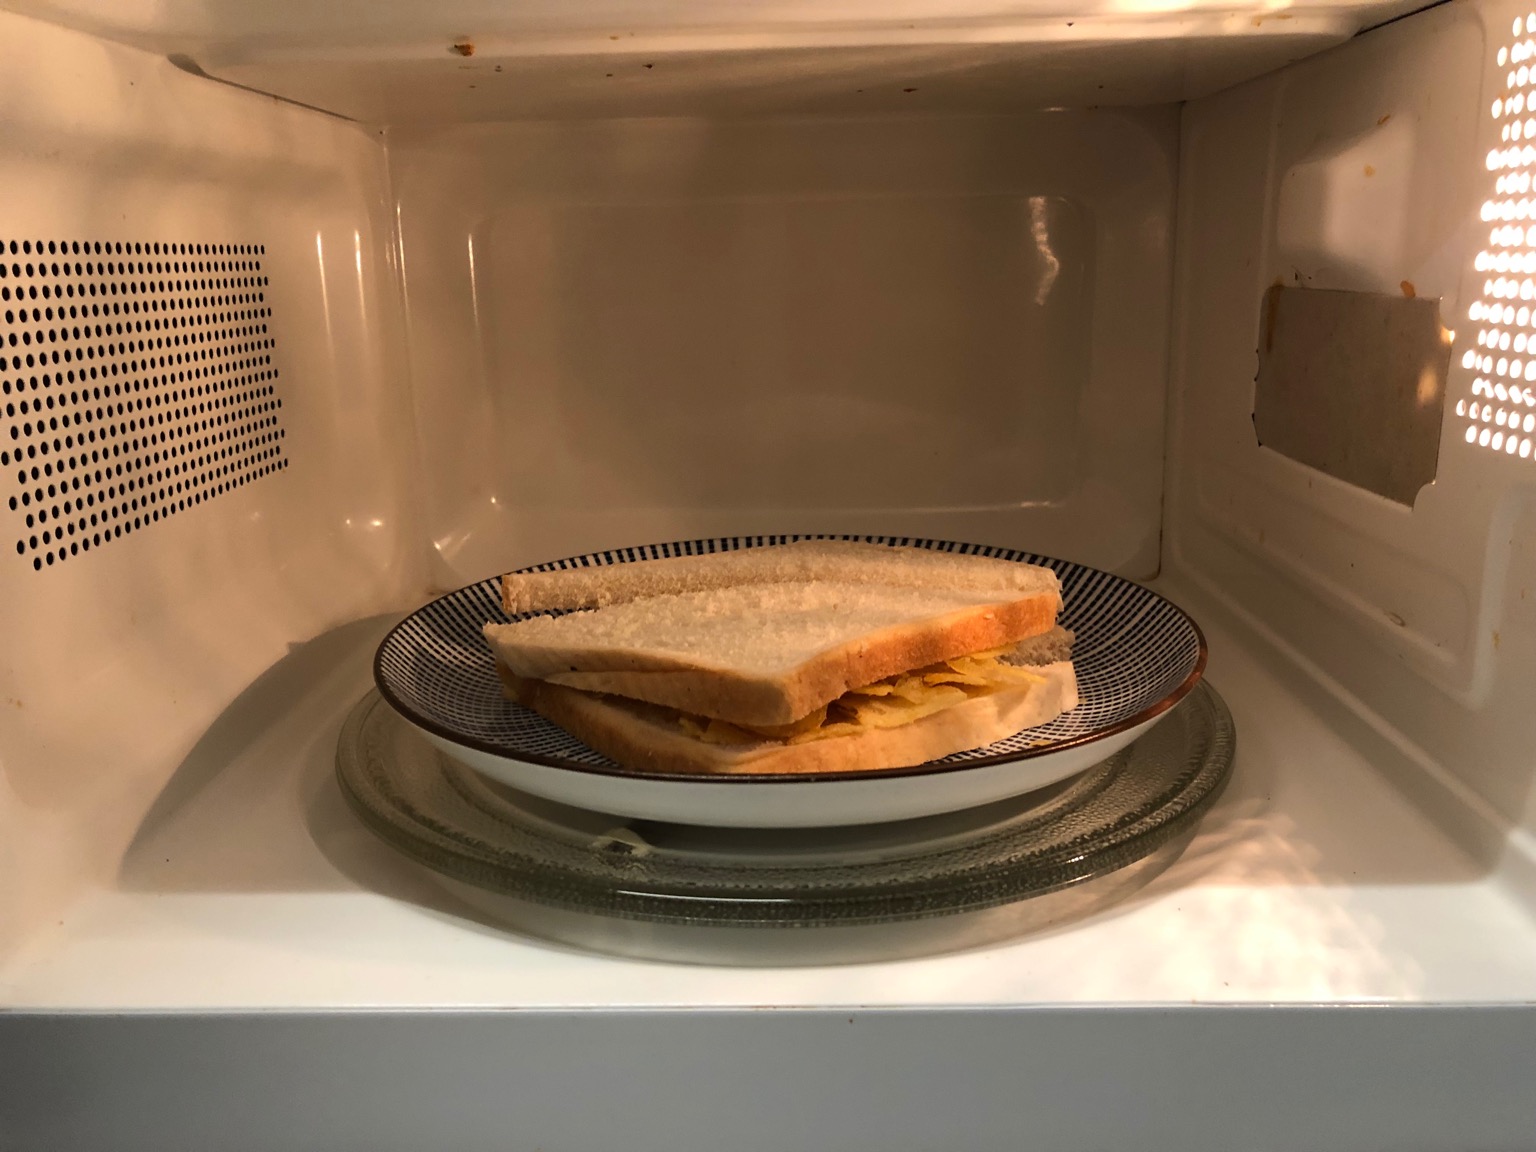 Diagonally-cut white crisp sandwich in a microwave